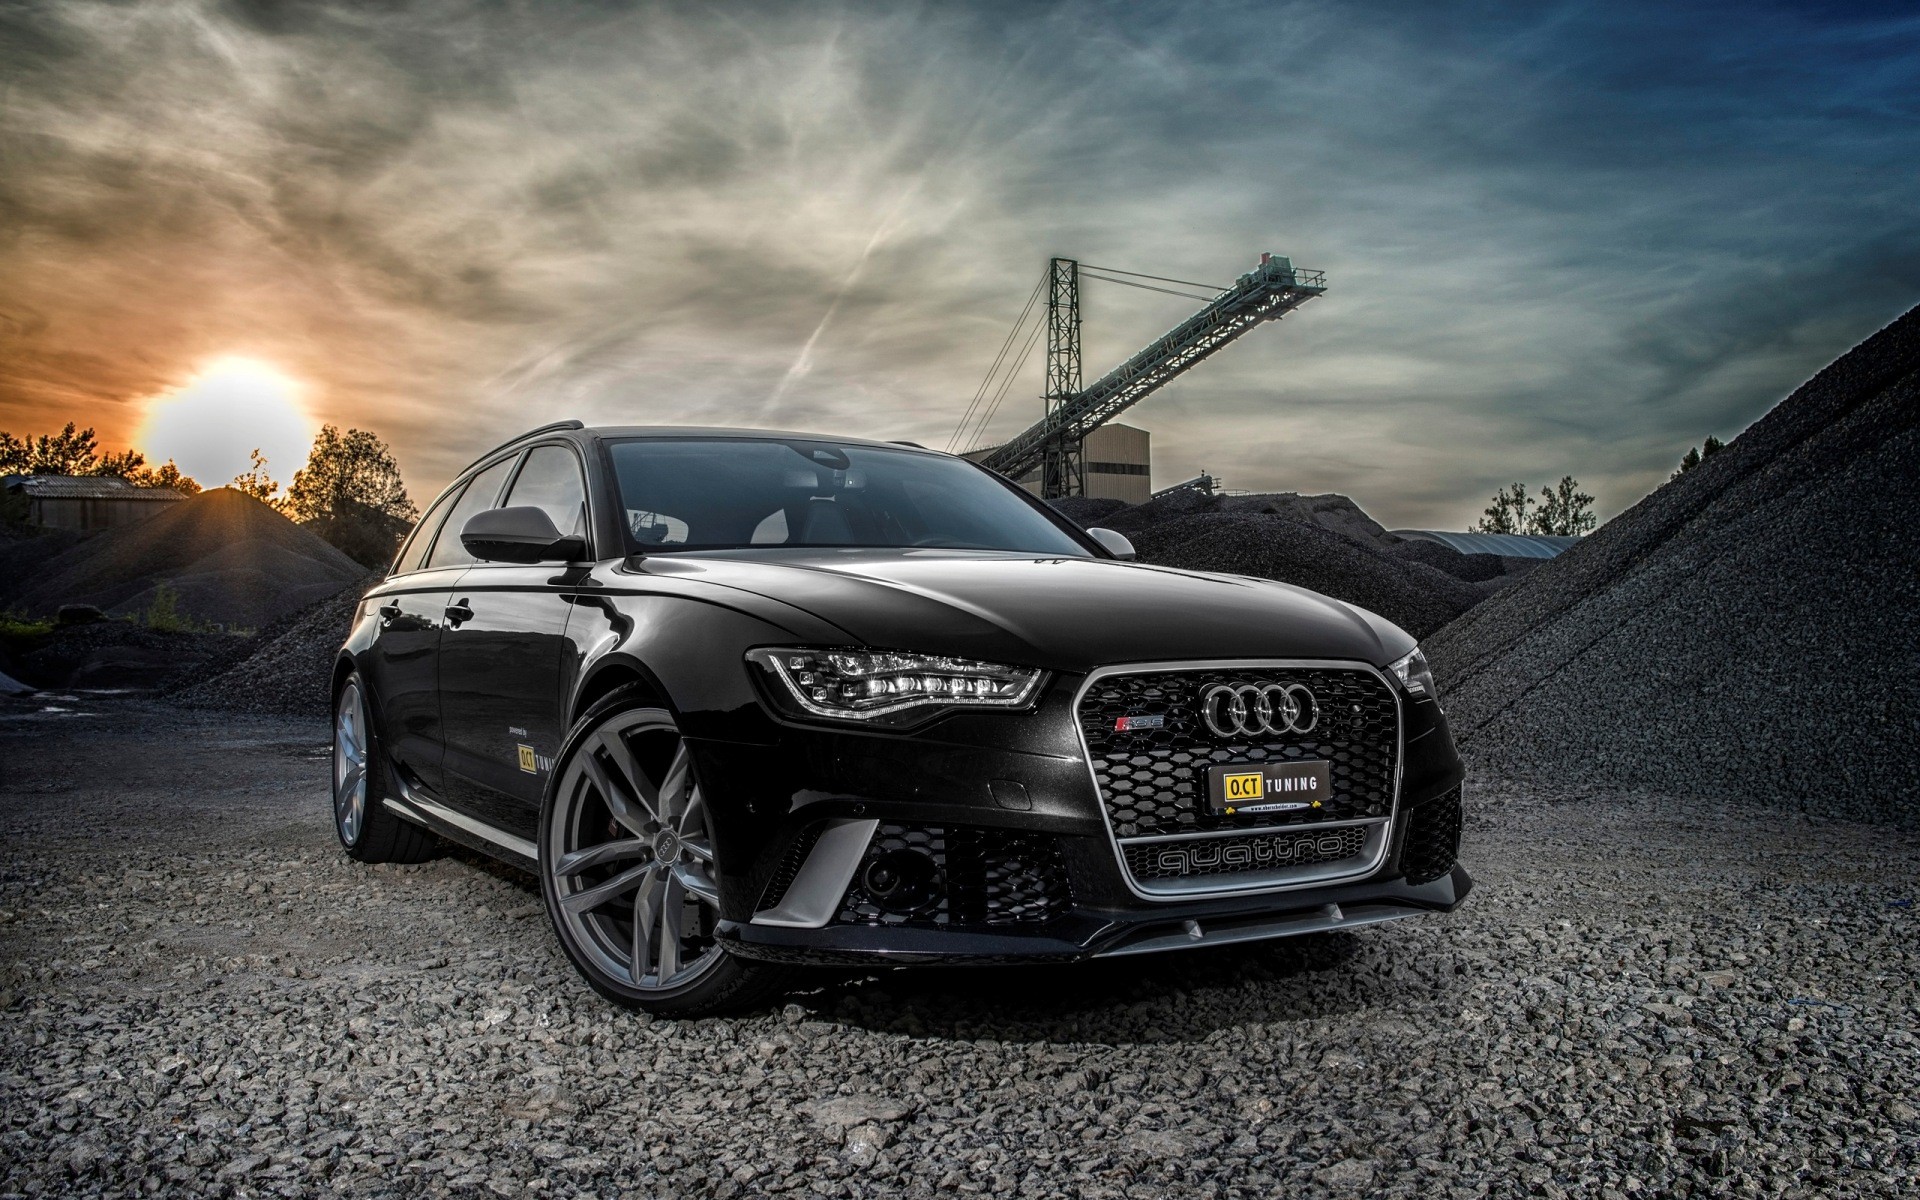 Black Audi Wallpaper HD free